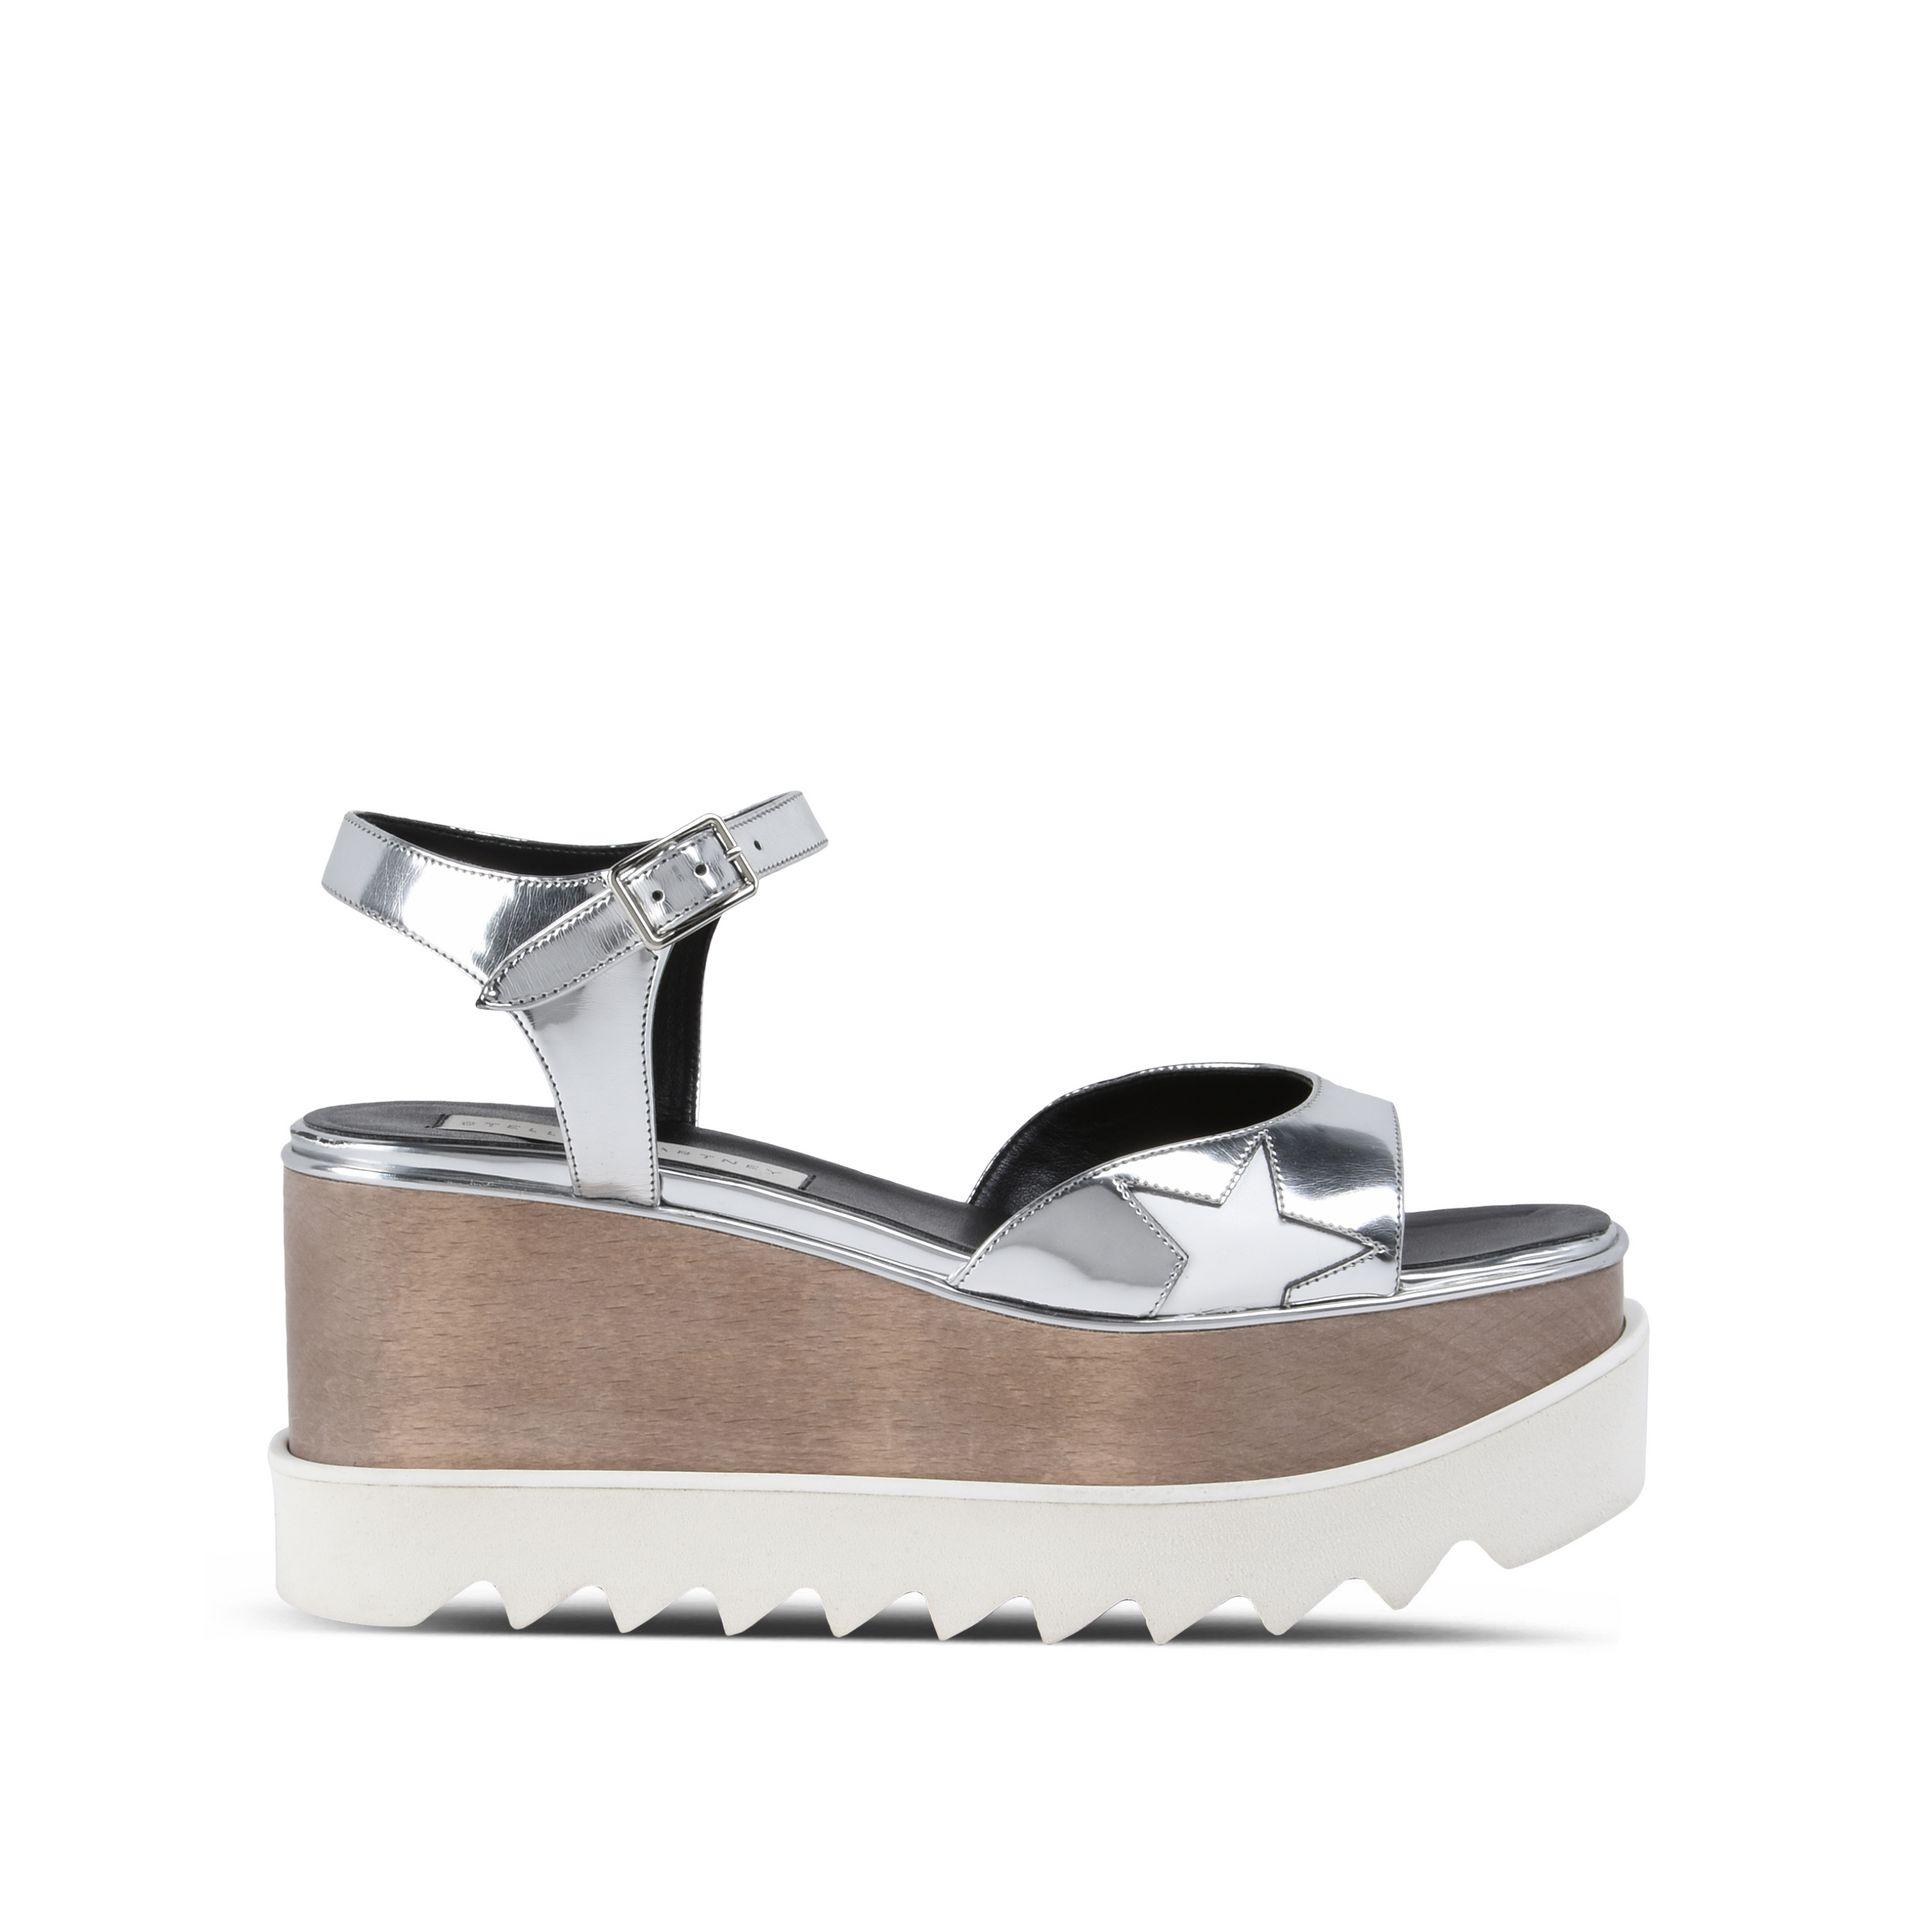 Stella mccartney Indium Elyse Star Sandals in Metallic | Lyst